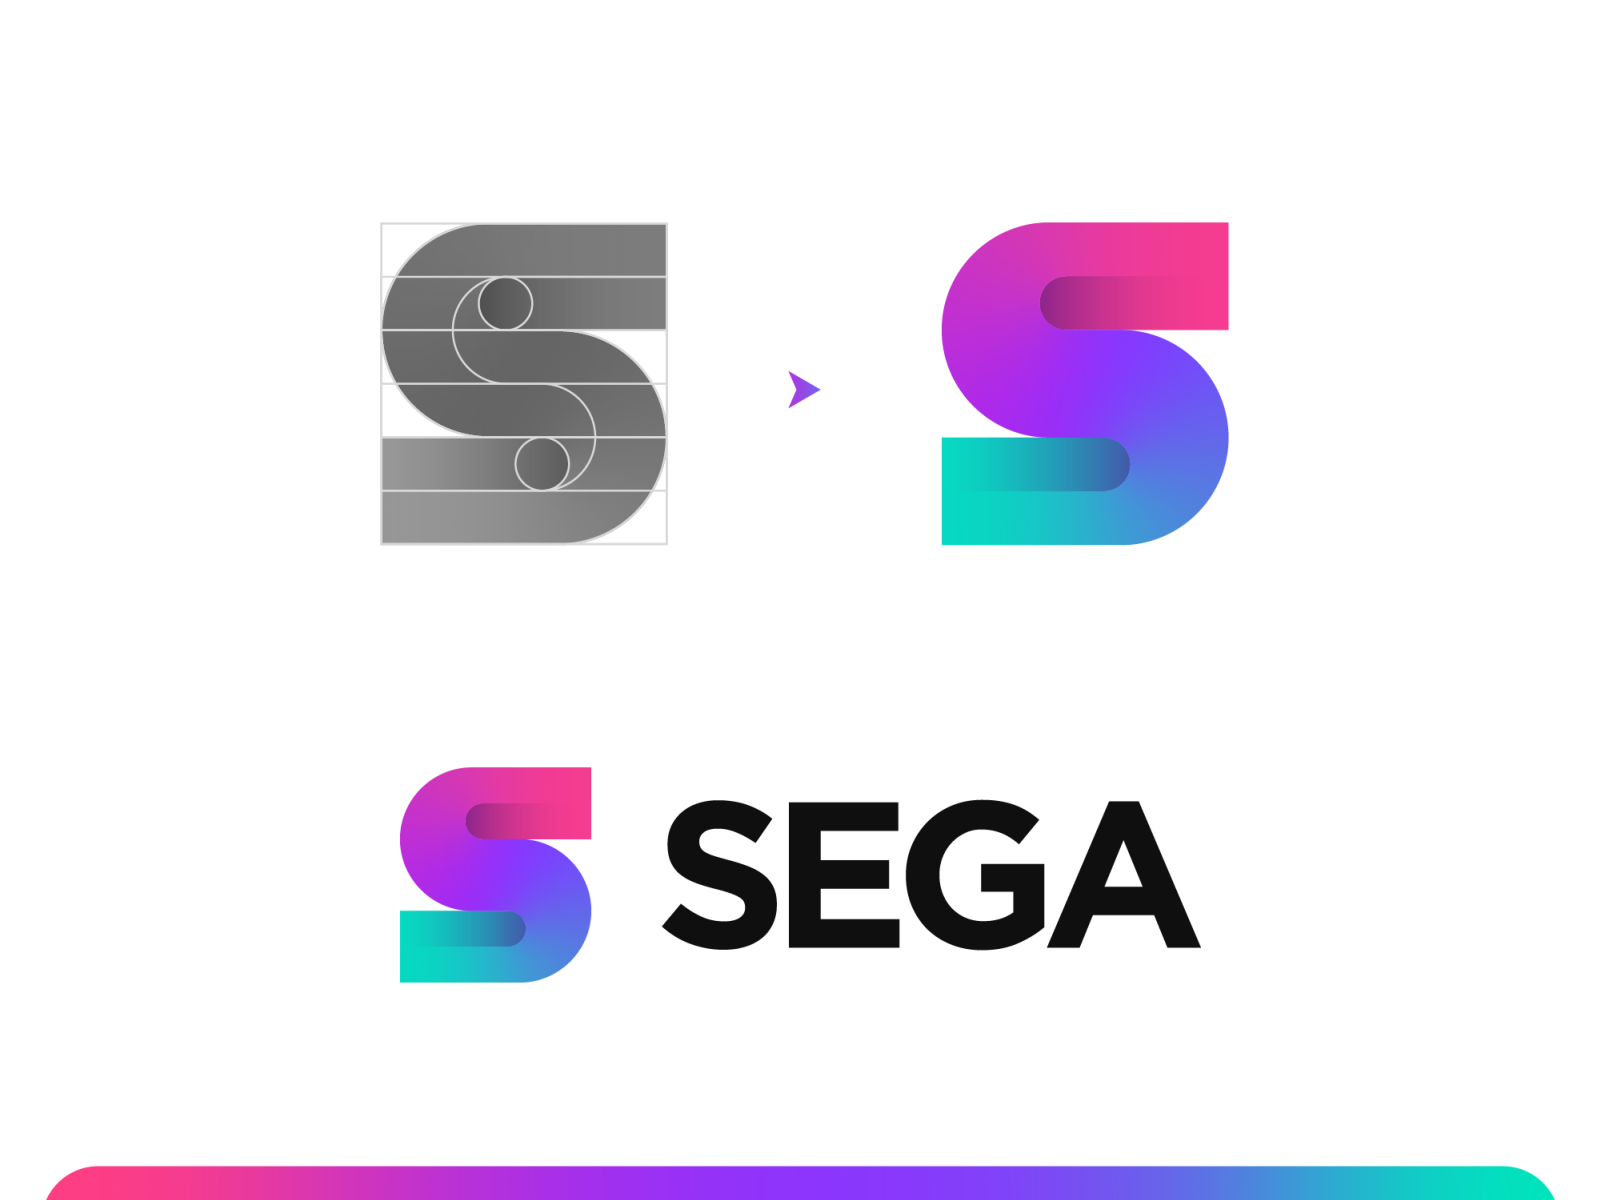 Sega logo has different colors in Japan and overseas '' - GIGAZINE